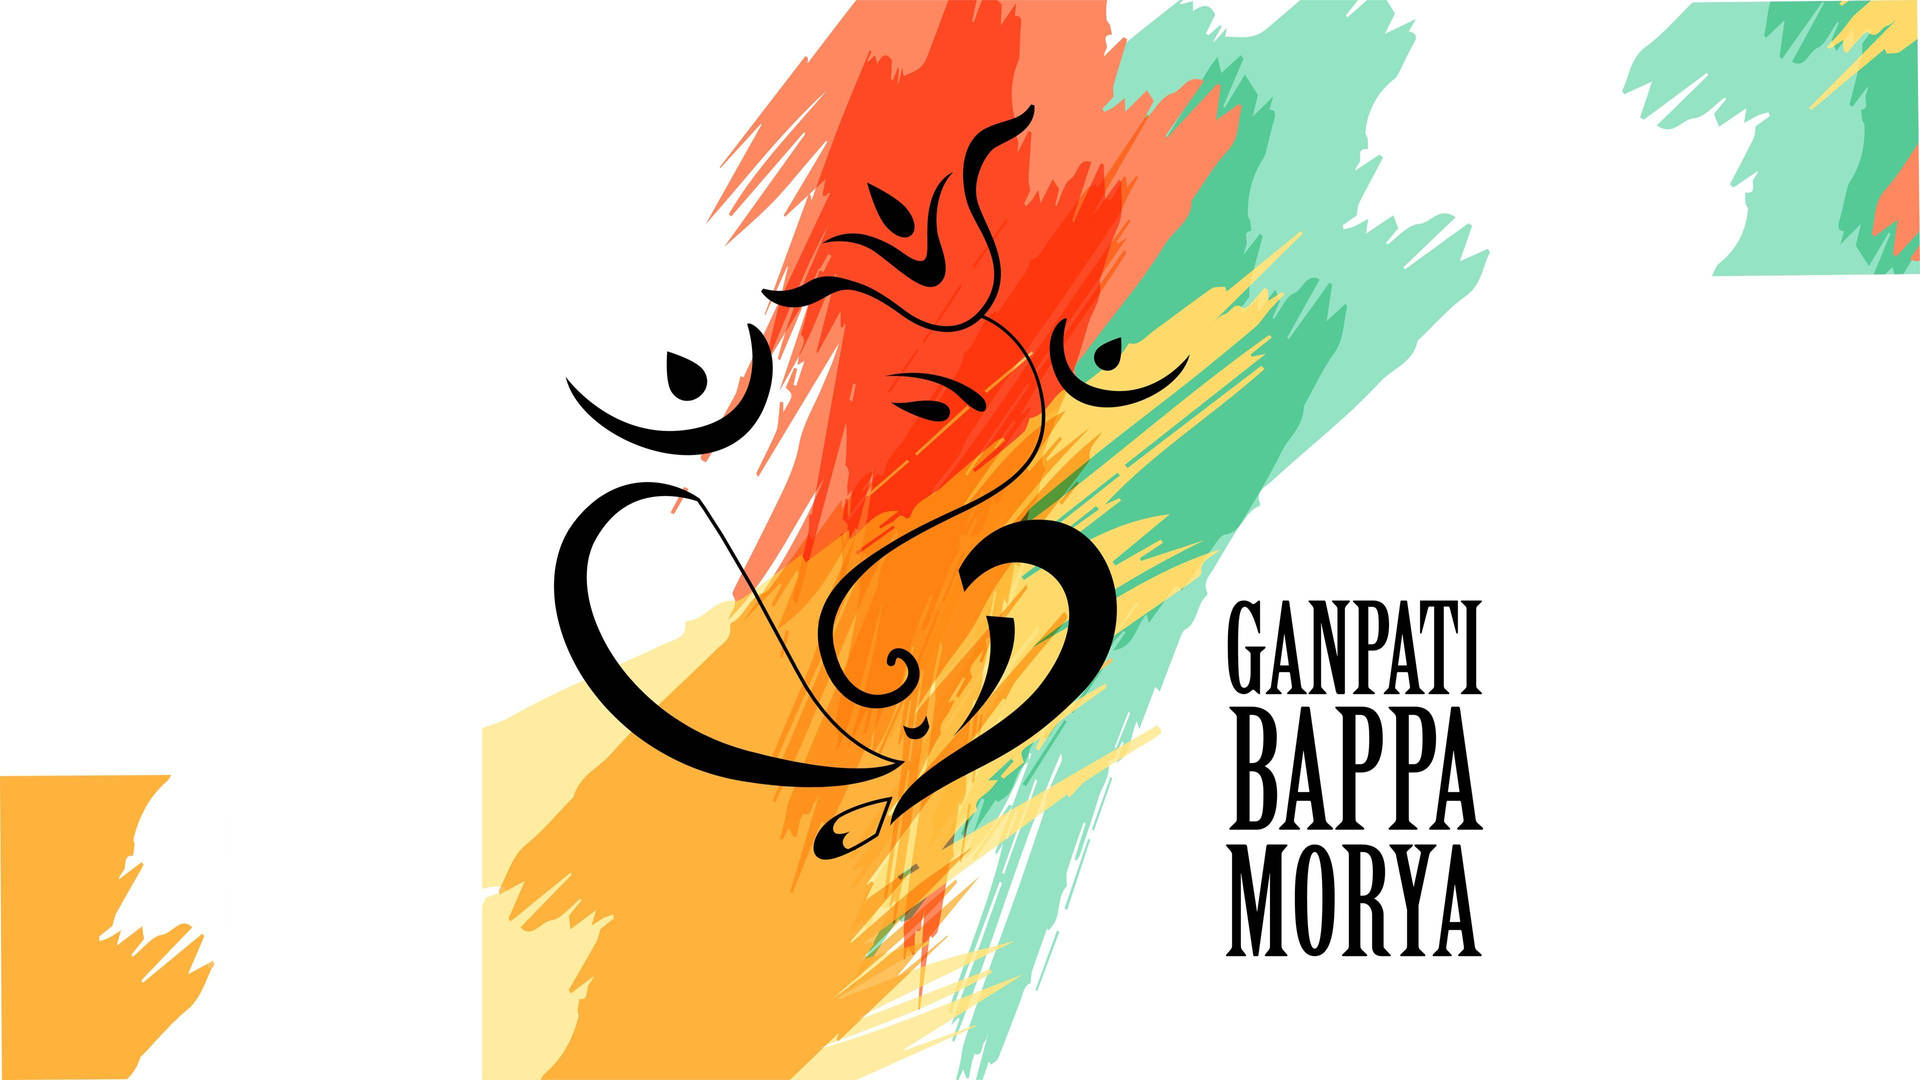 Ganesha The Lord Of Wisdom Design Vector Art Illustration Background  Wallpaper Image For Free Download  Pngtree